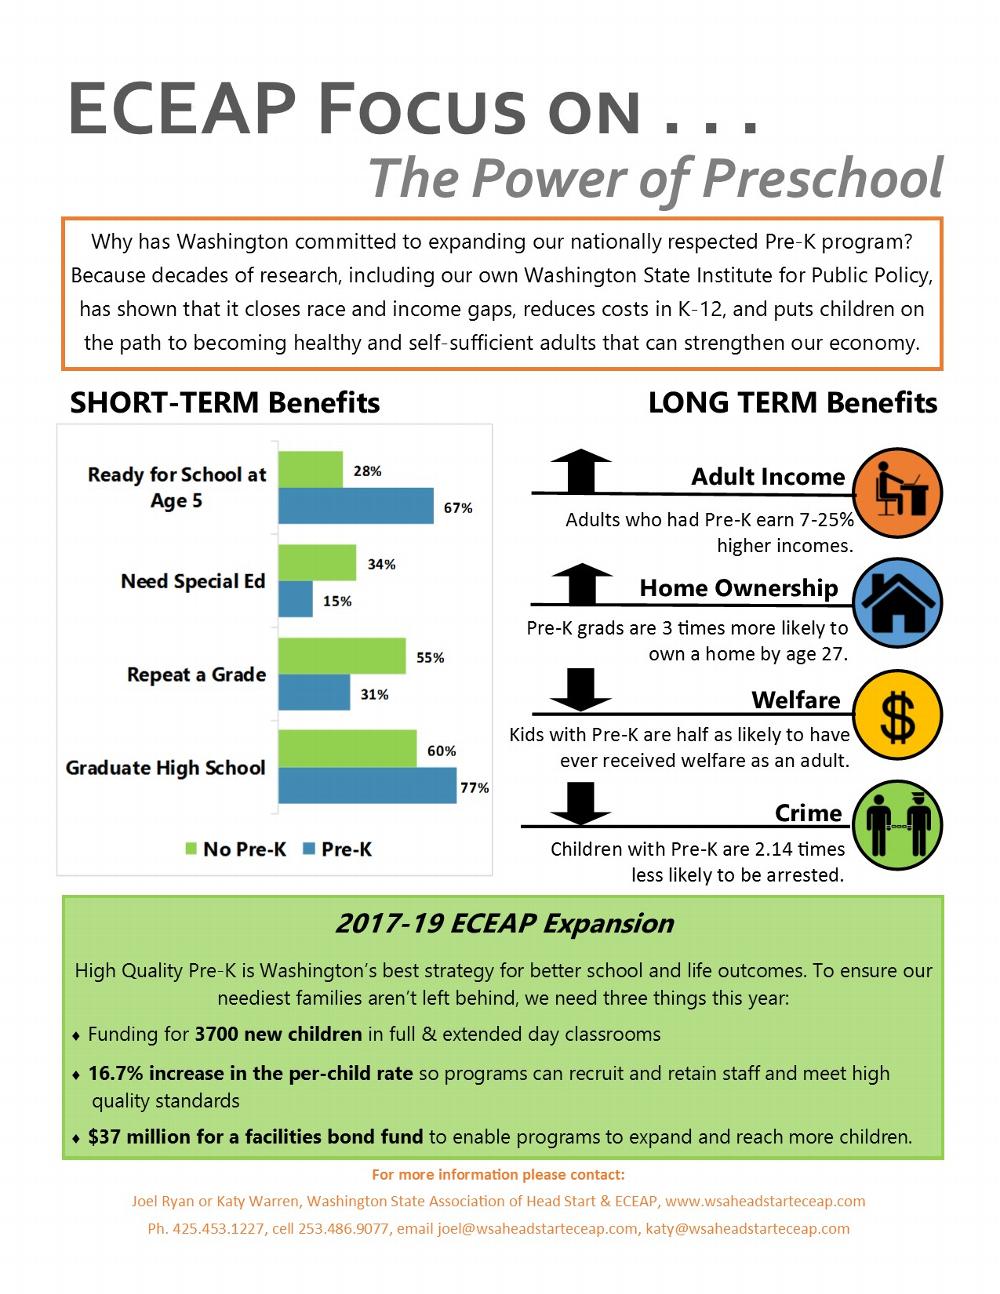 ECEAP Focus on the Power of Preschool